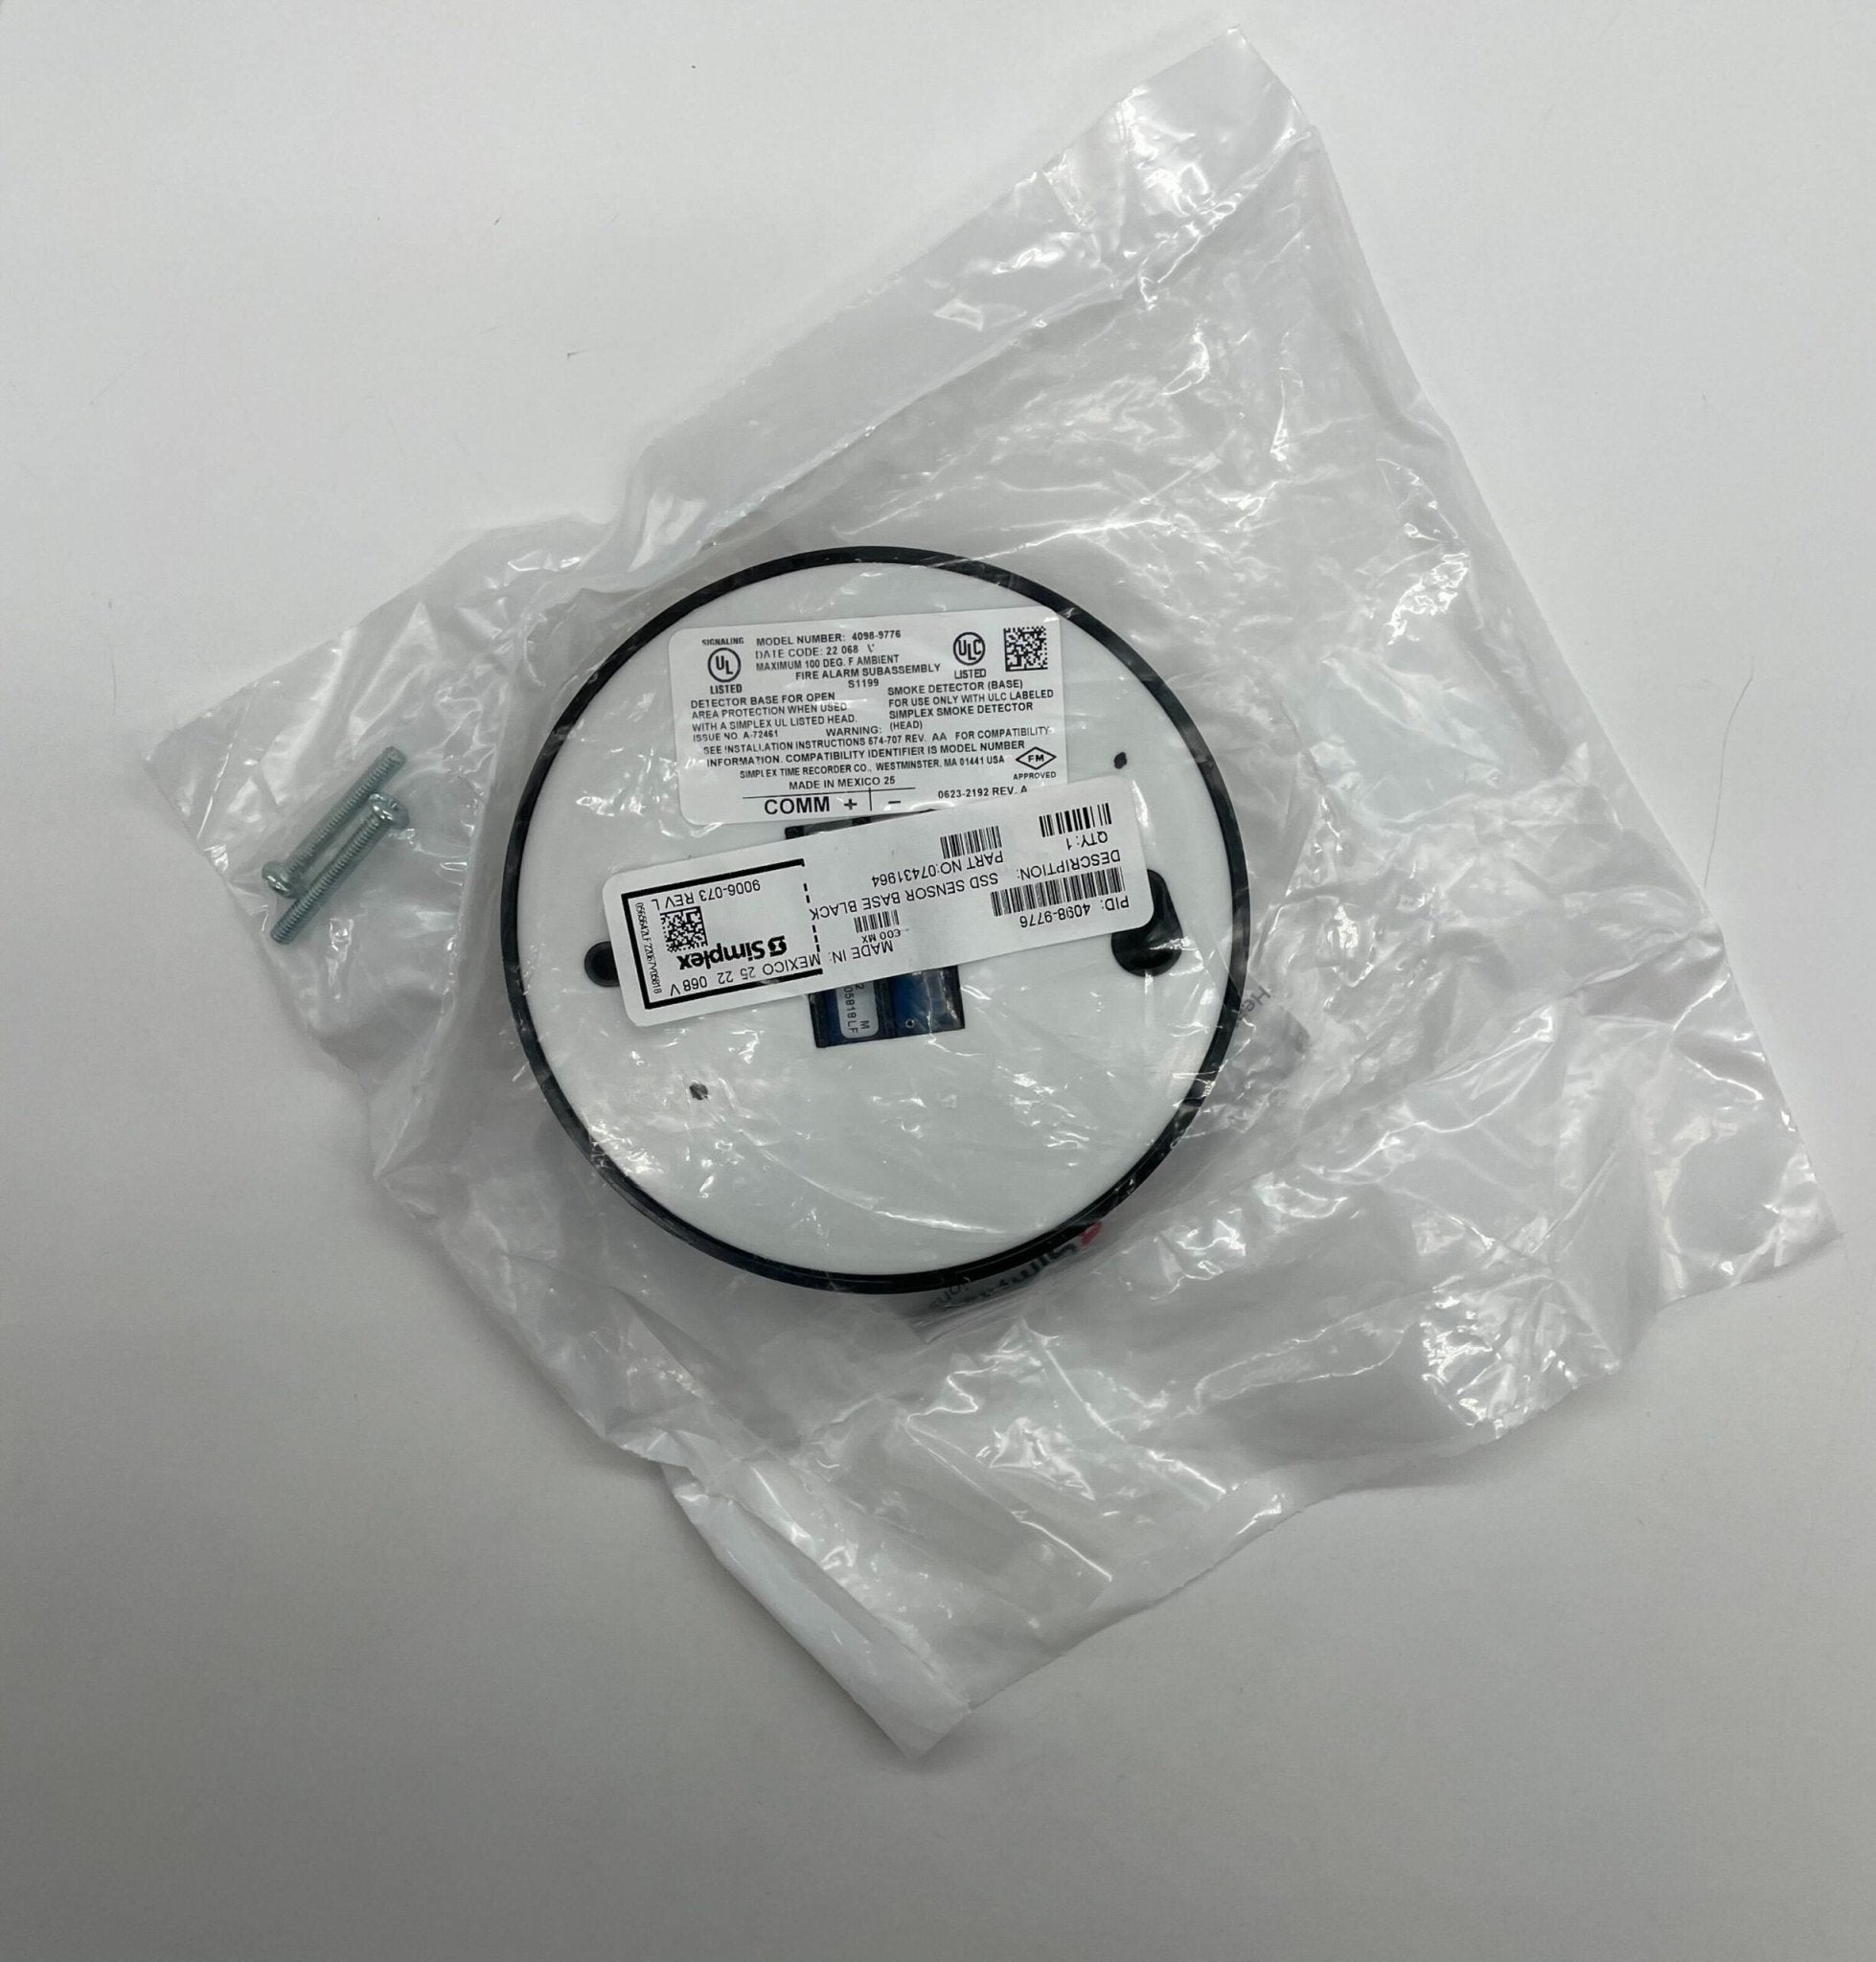 Simplex 4098-9776 Ssd Black Sensor Base - The Fire Alarm Supplier